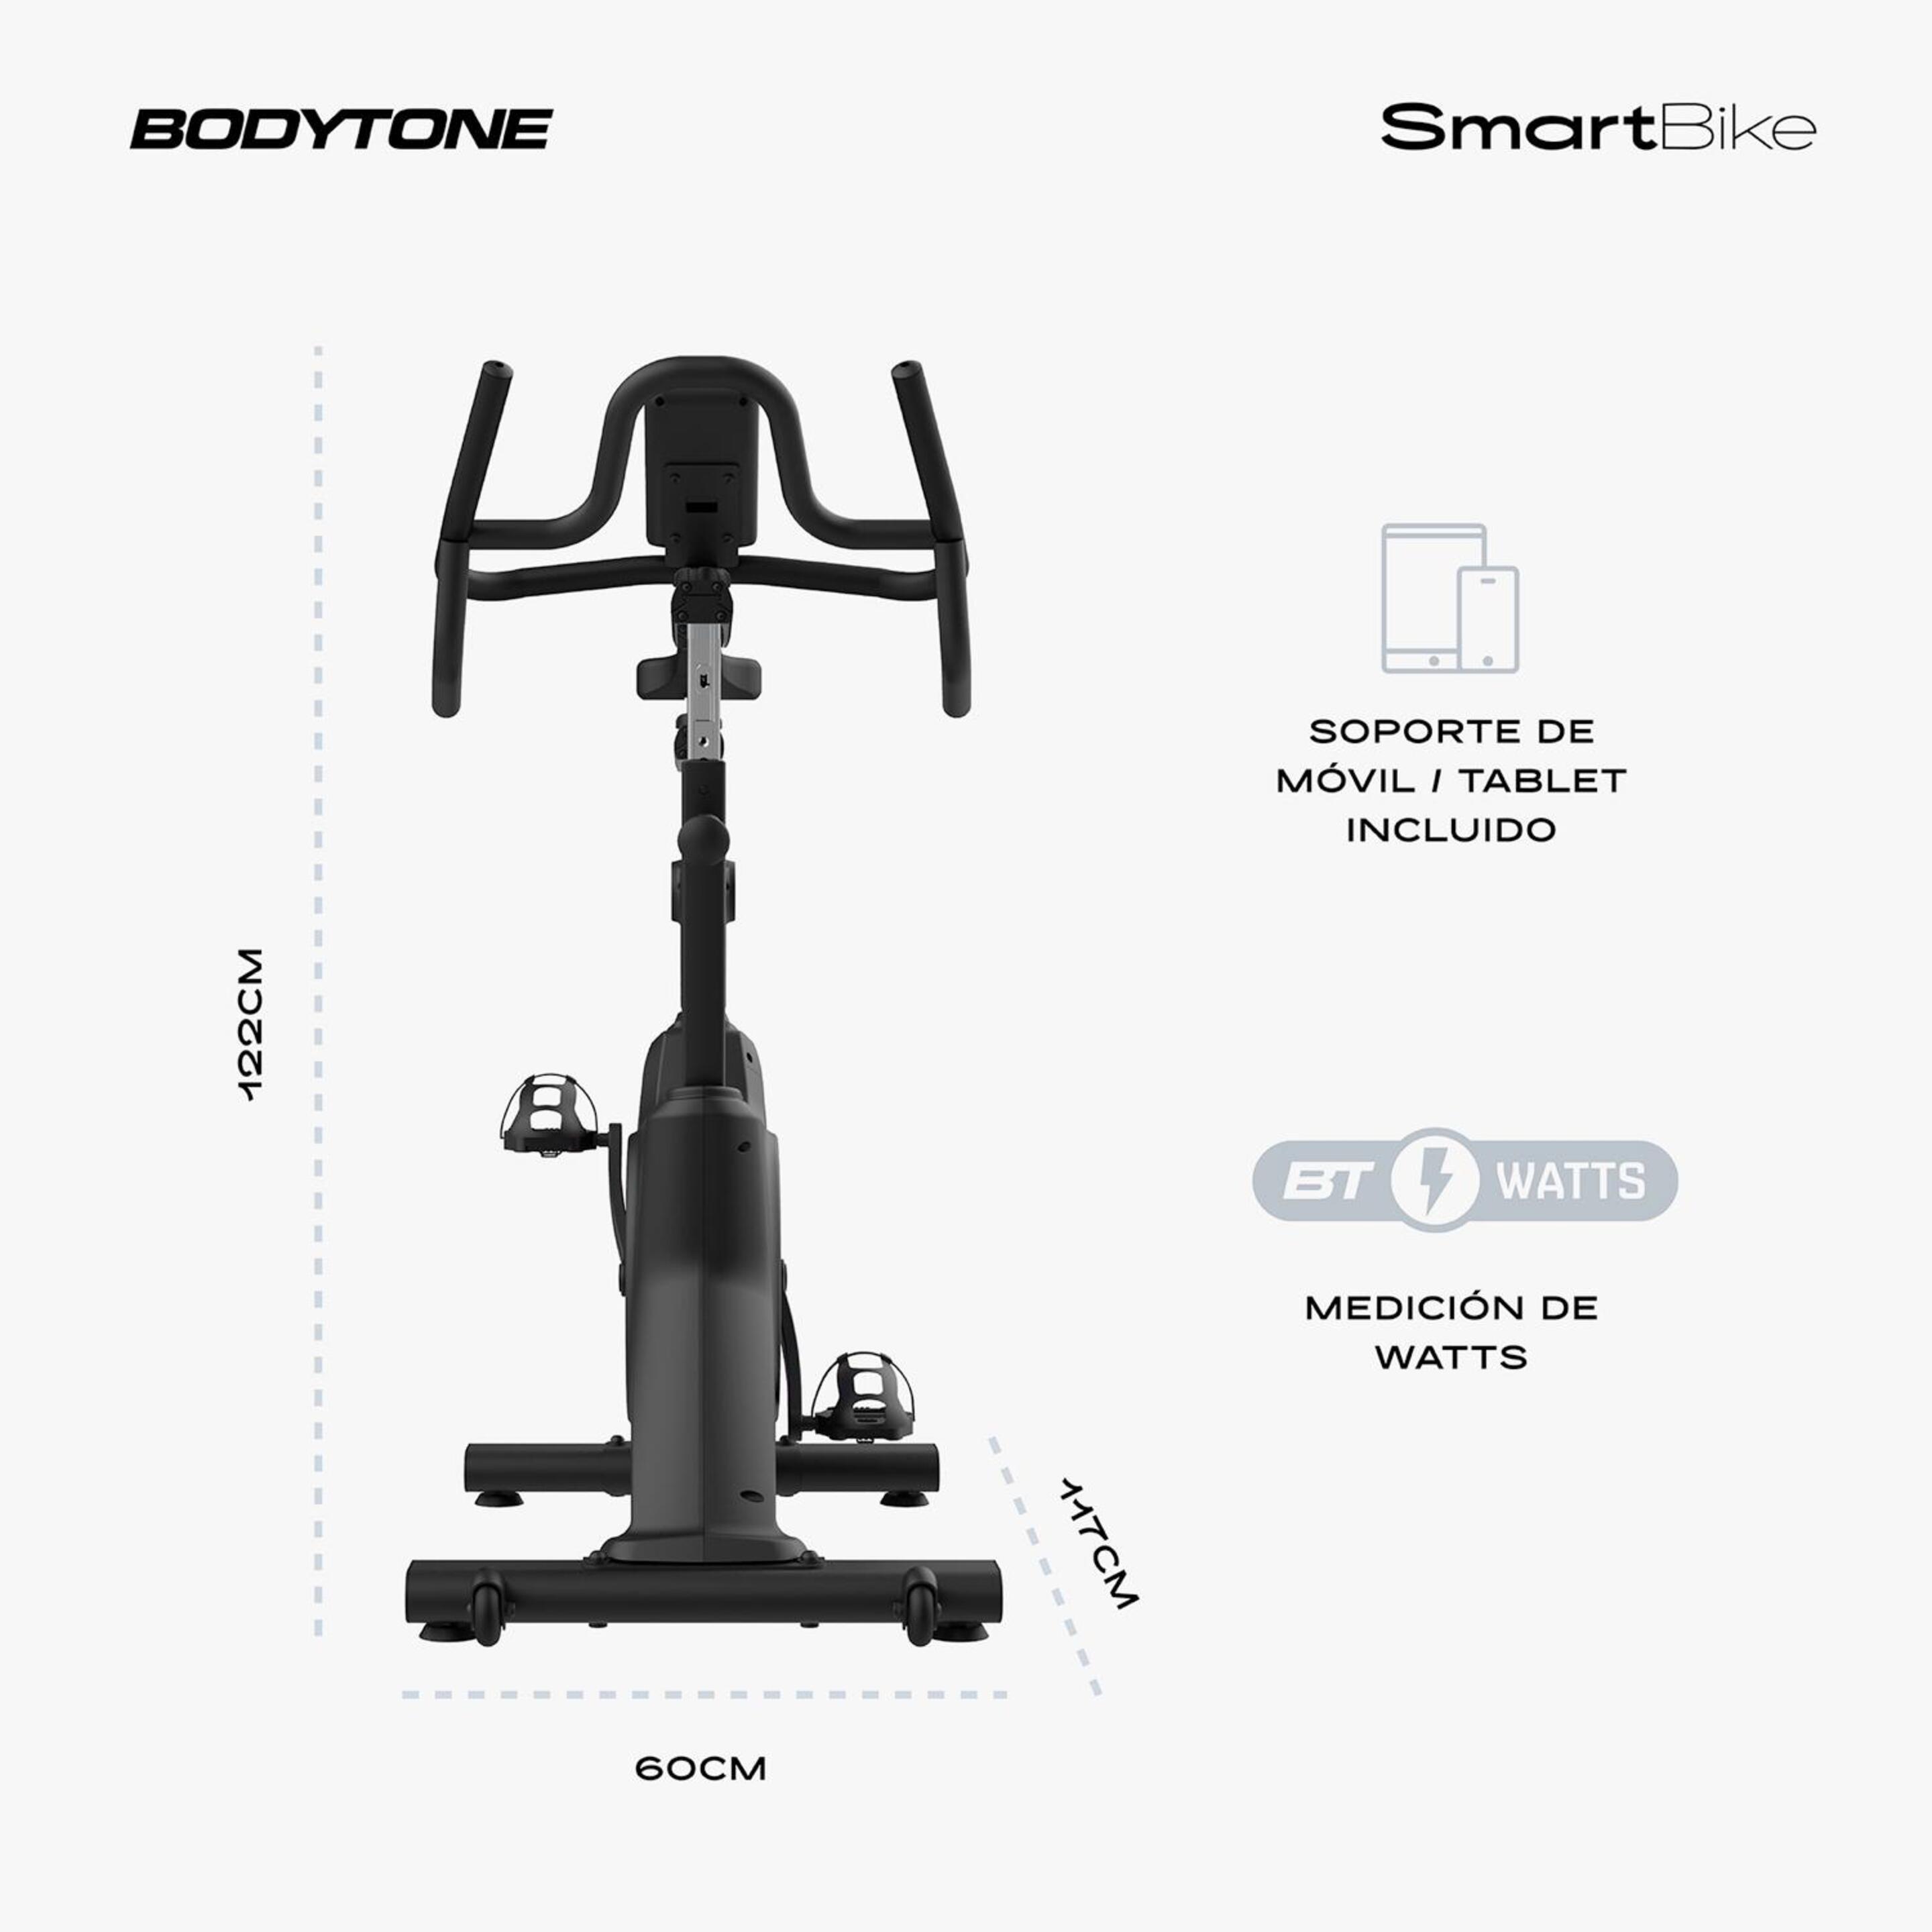 Bodytone Smart Bike Smb1 V1